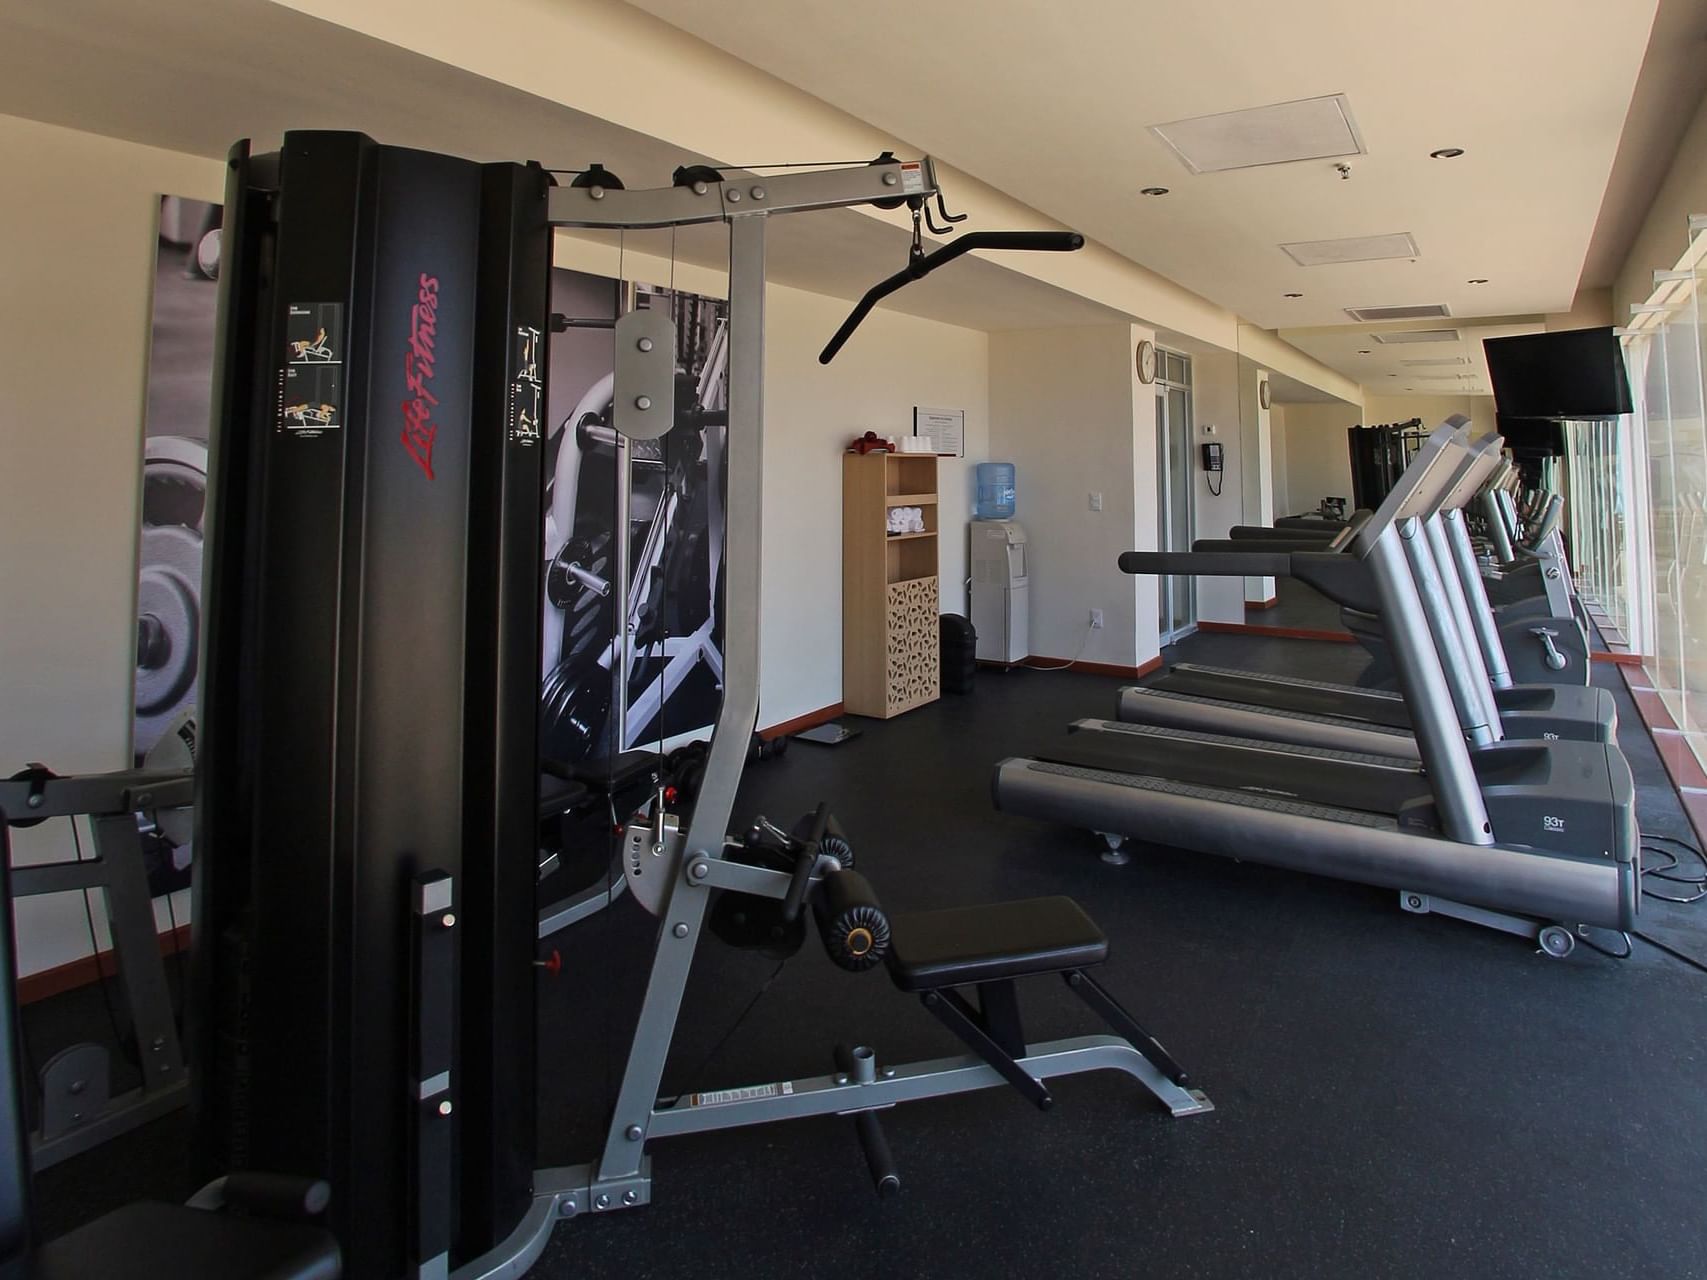 Fully equipped Gym Wellness center at Fiesta Inn Hotels